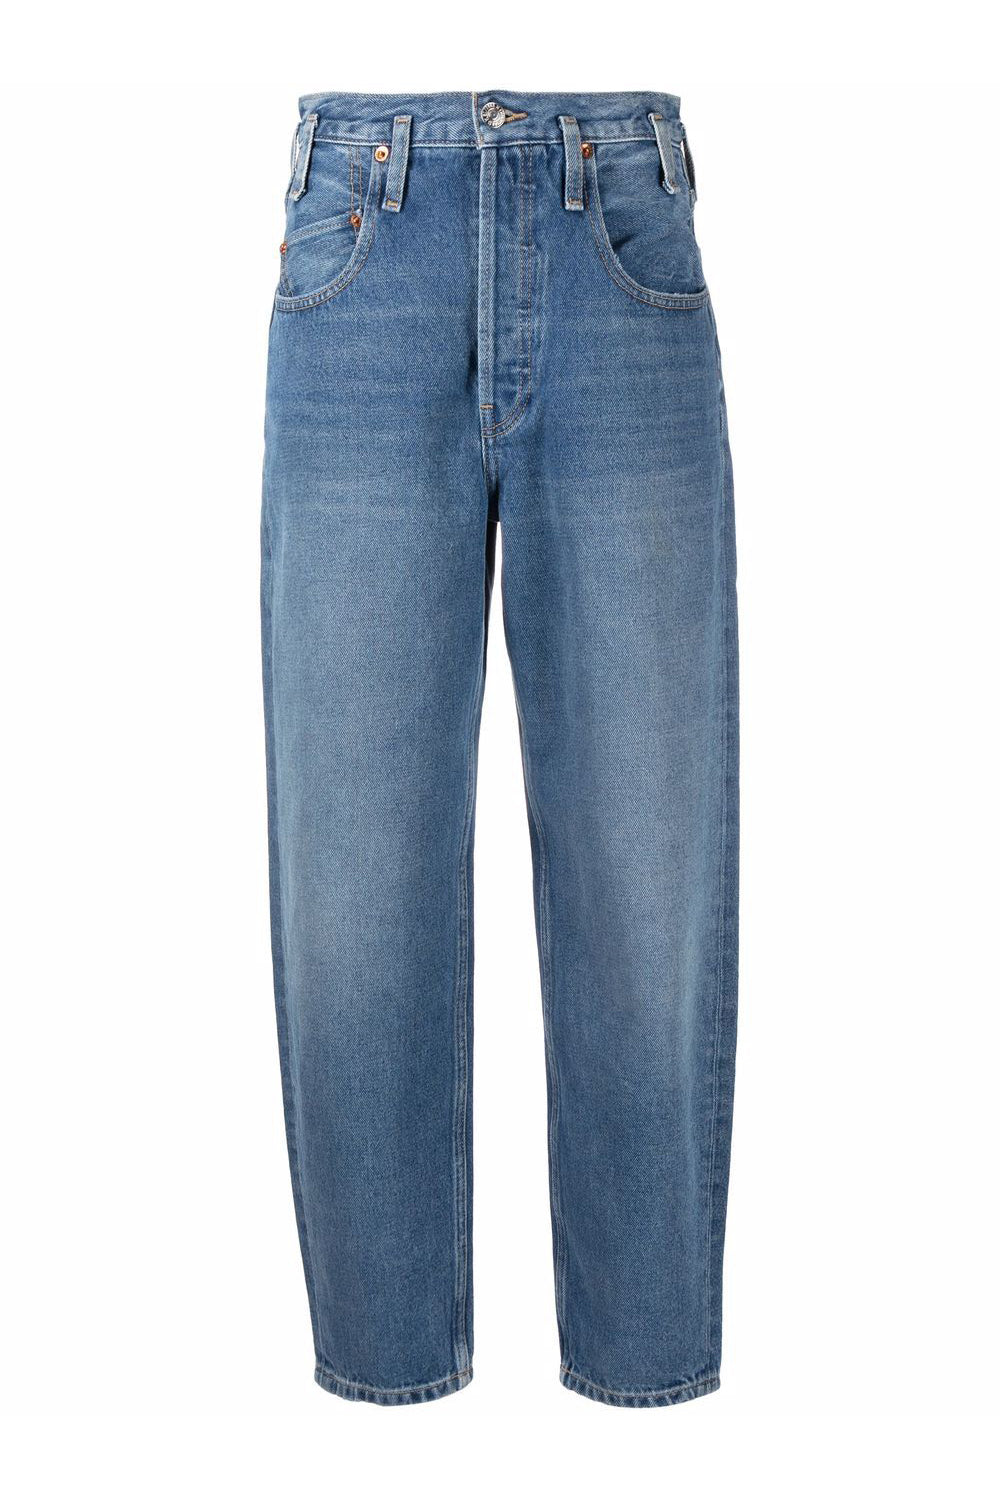 70s high-waist tapered-leg jeans